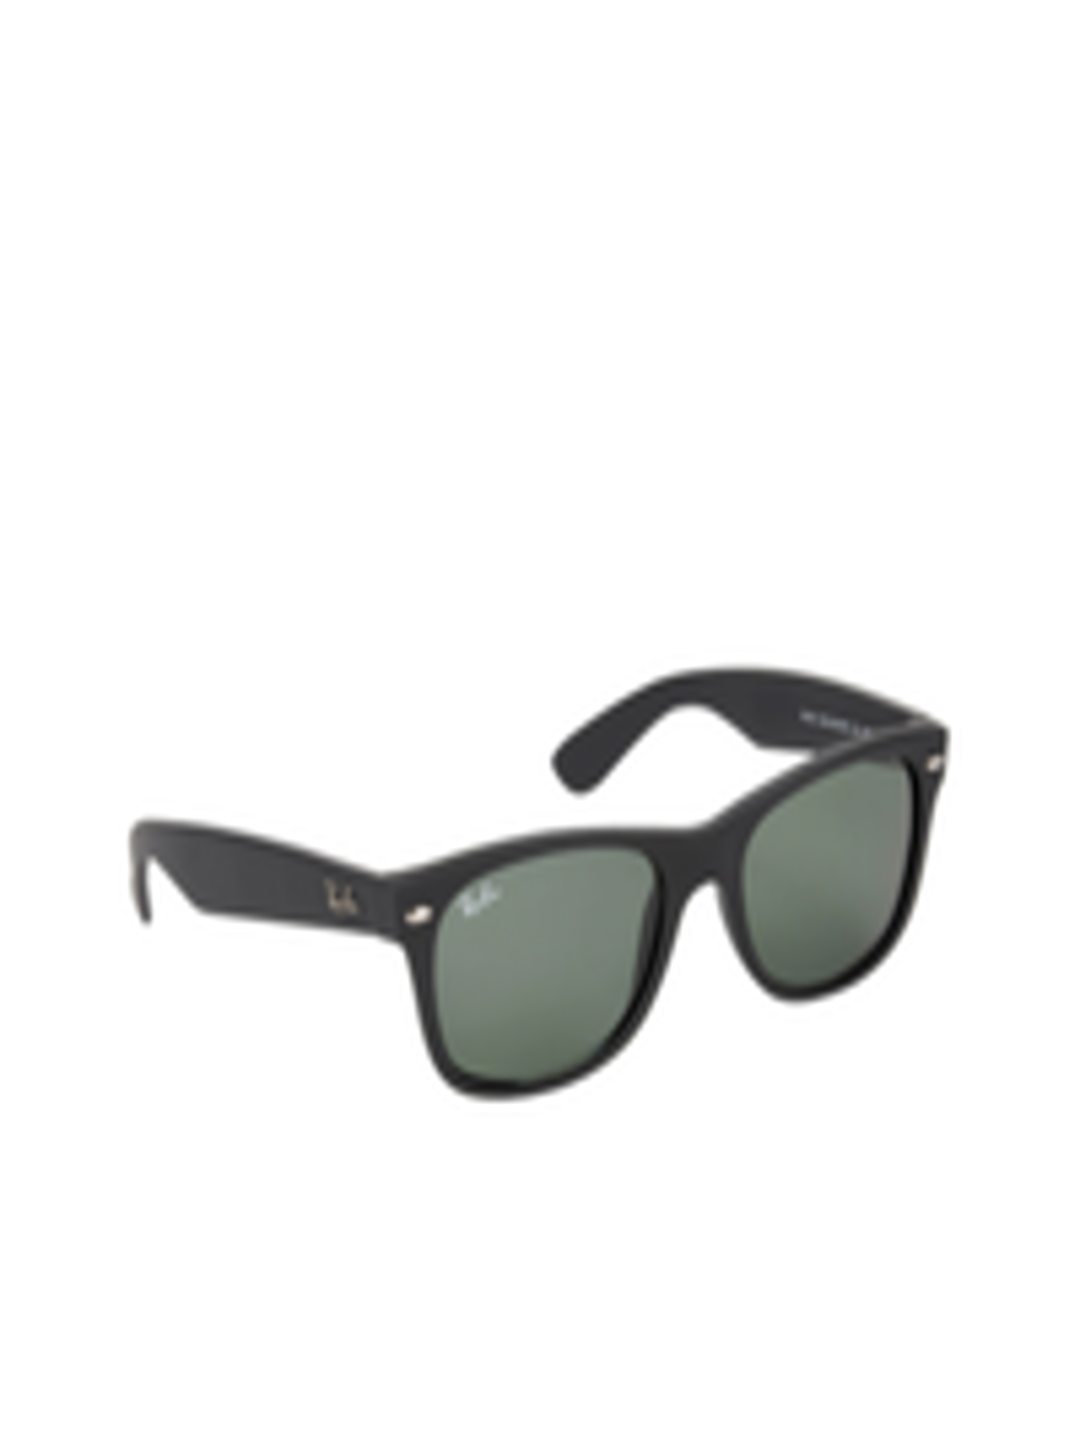 Buy Ray Ban Unisex Sunglasses - Sunglasses for Unisex 135204 | Myntra